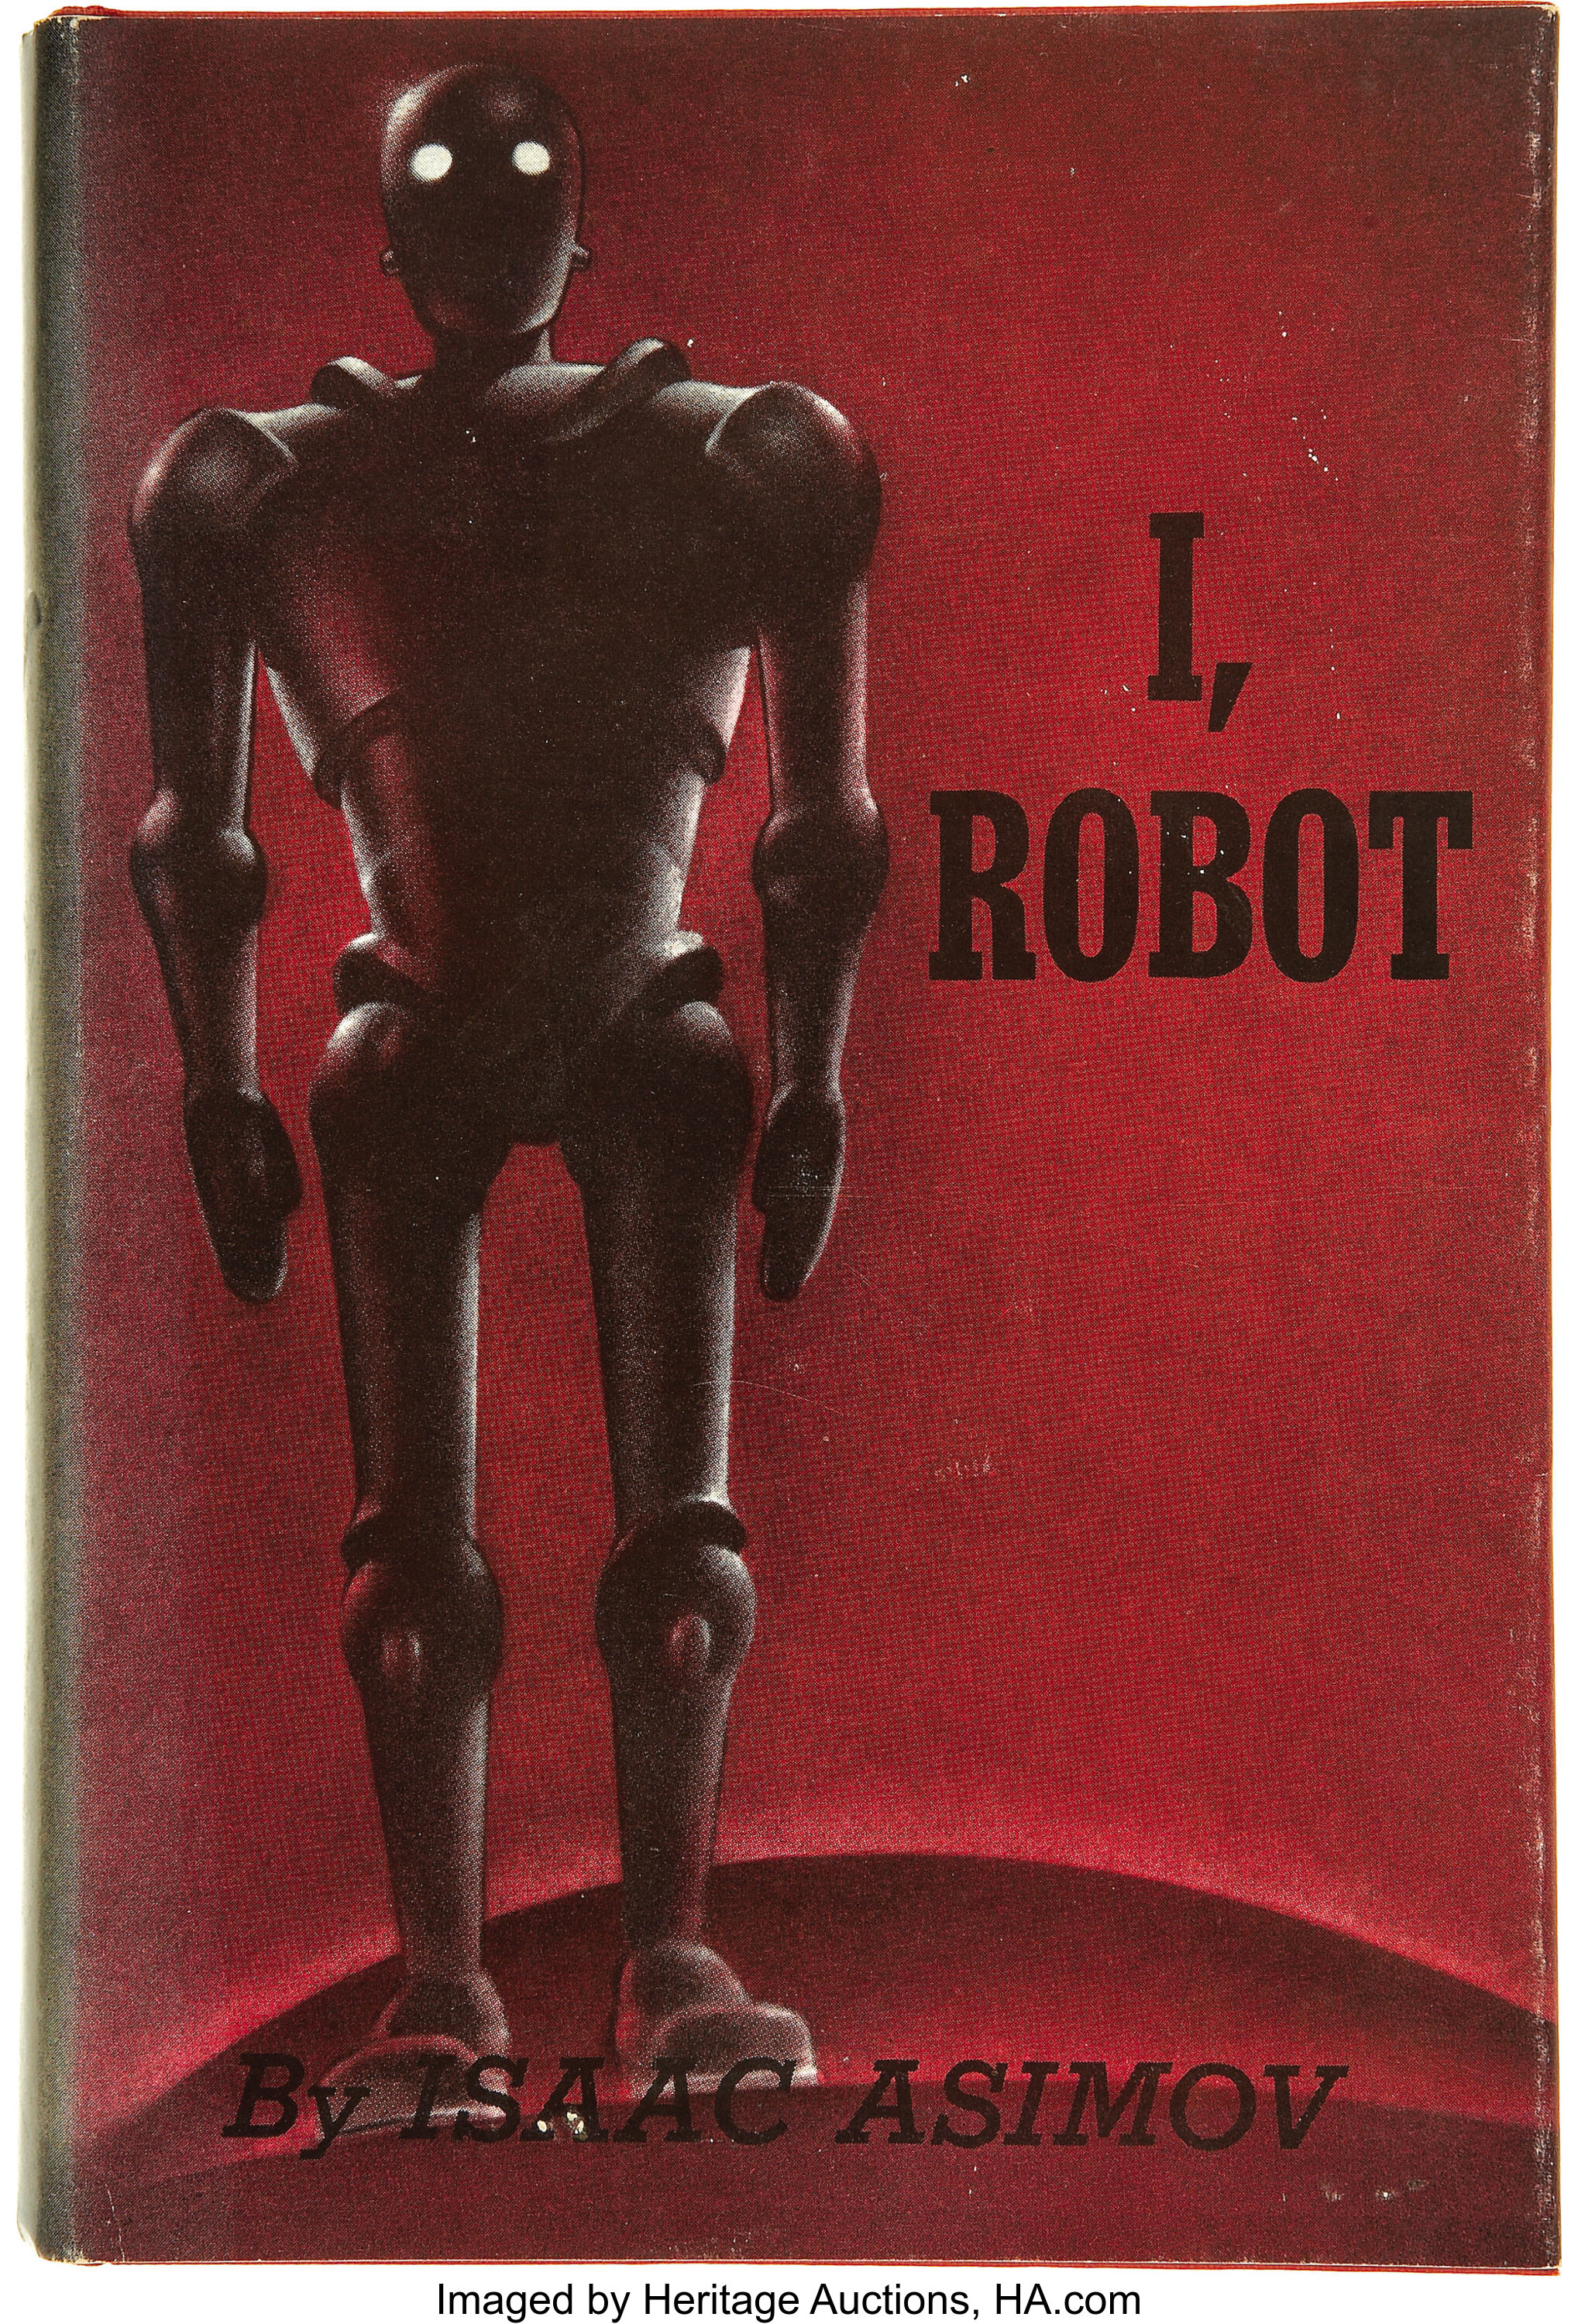 I, Robot (Robot, #0.1) by Isaac Asimov